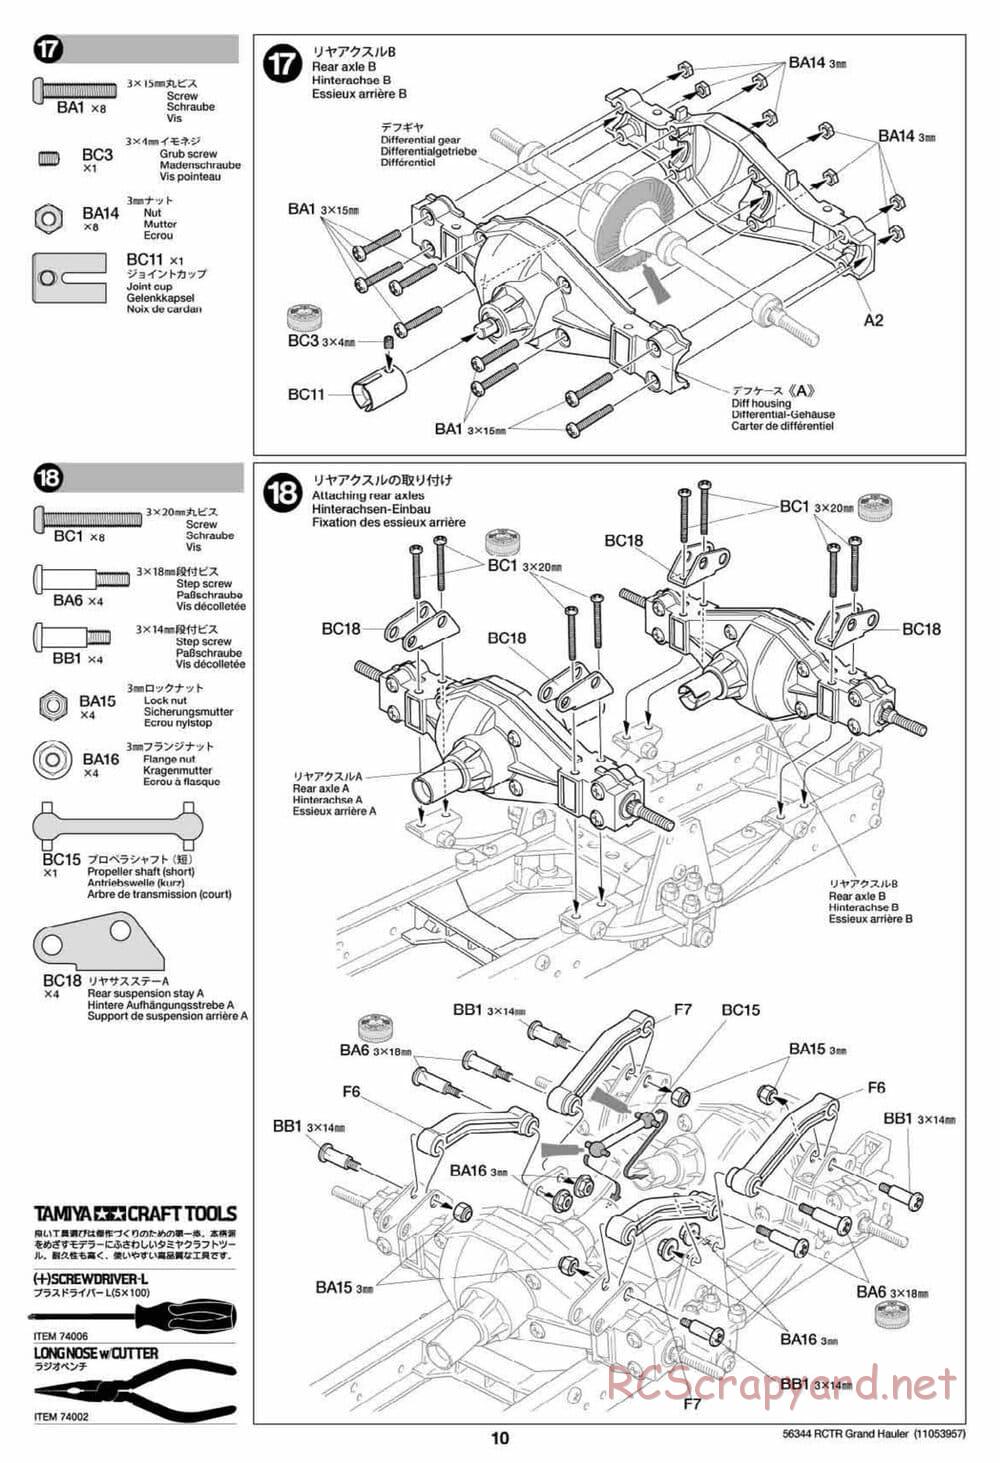 Tamiya - Grand Hauler Tractor Truck Chassis - Manual - Page 10